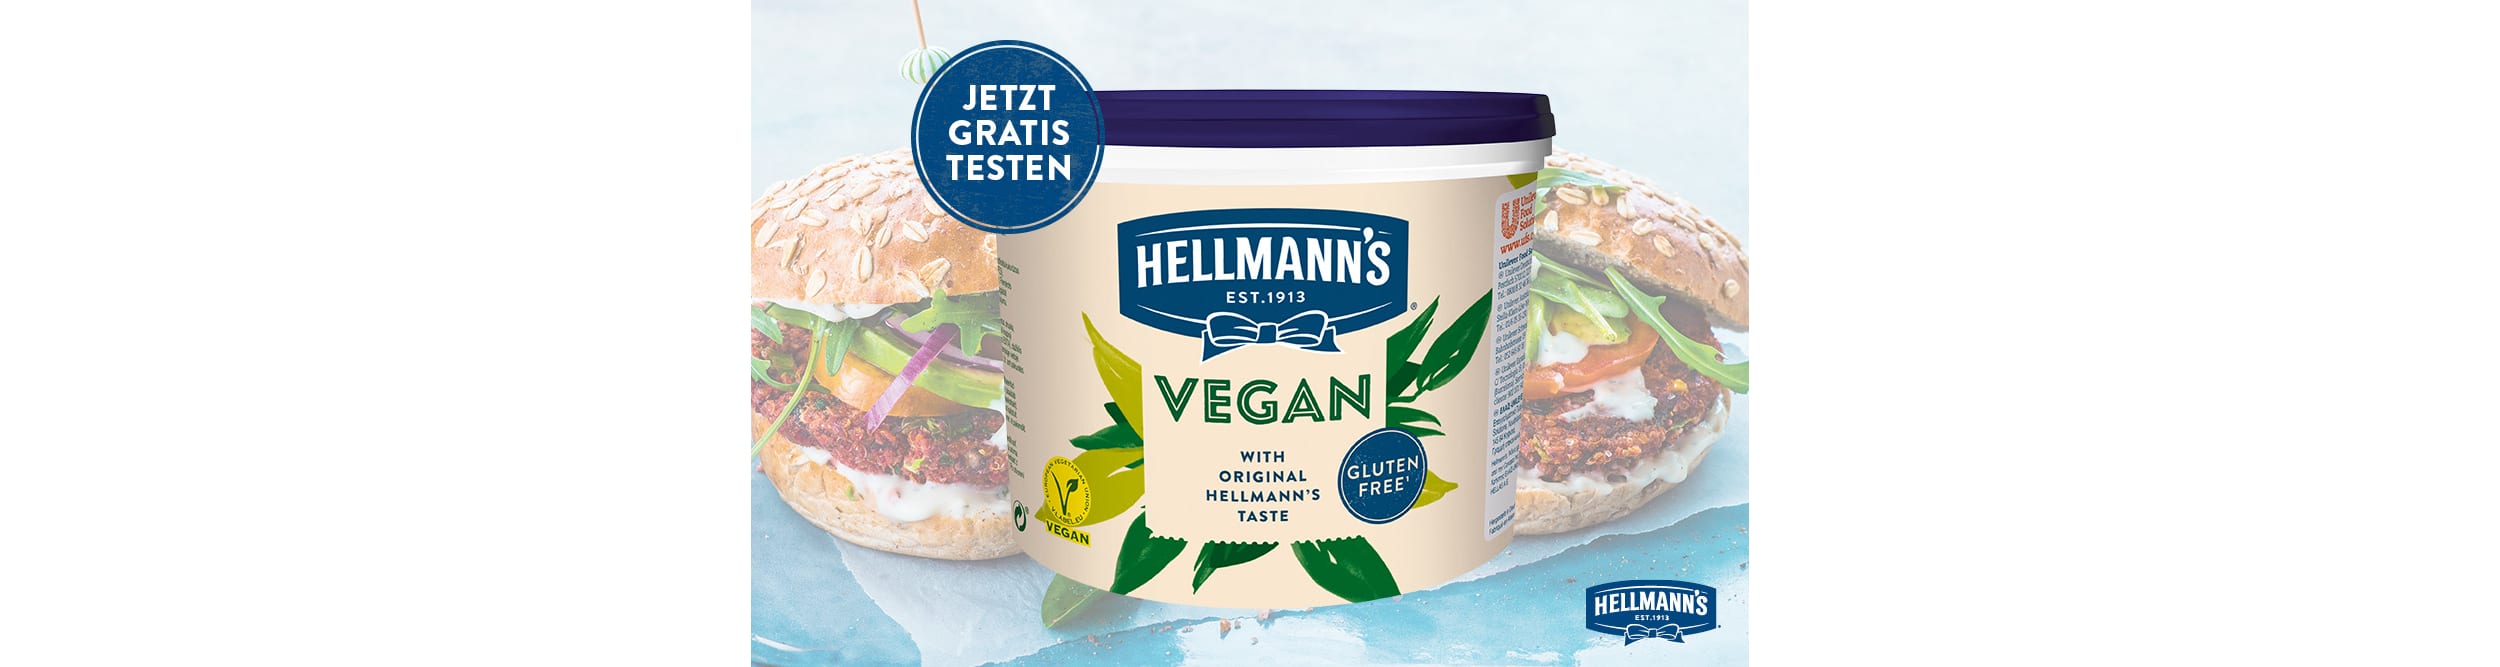 Hellmann's Vegan Mayo Aktion